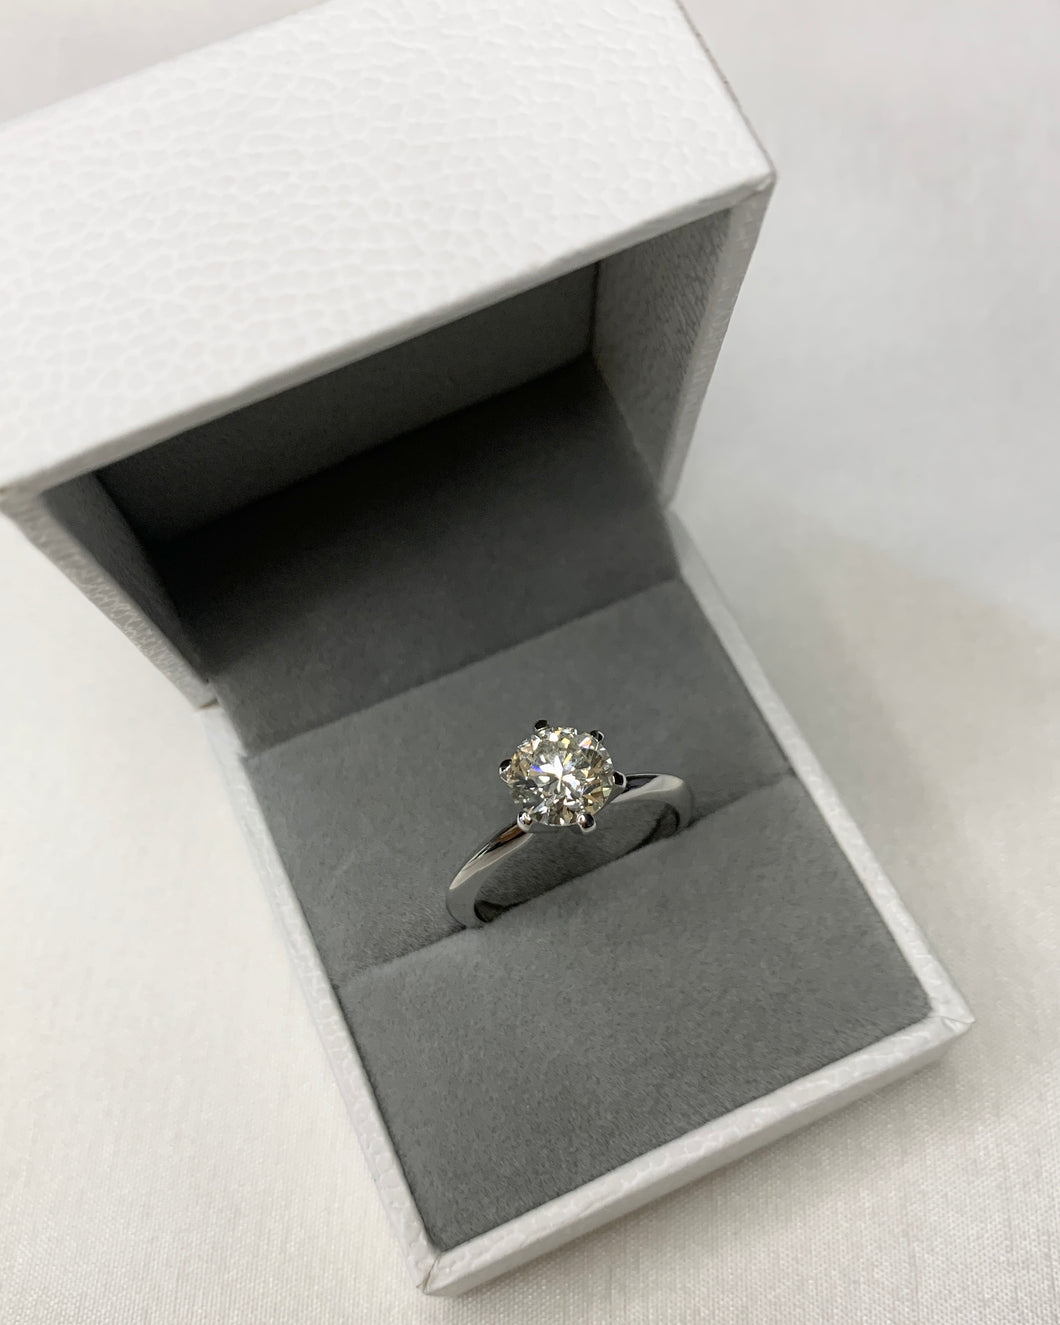 1.51 carat lab grown diamond set in six prongs, in 14k white gold.